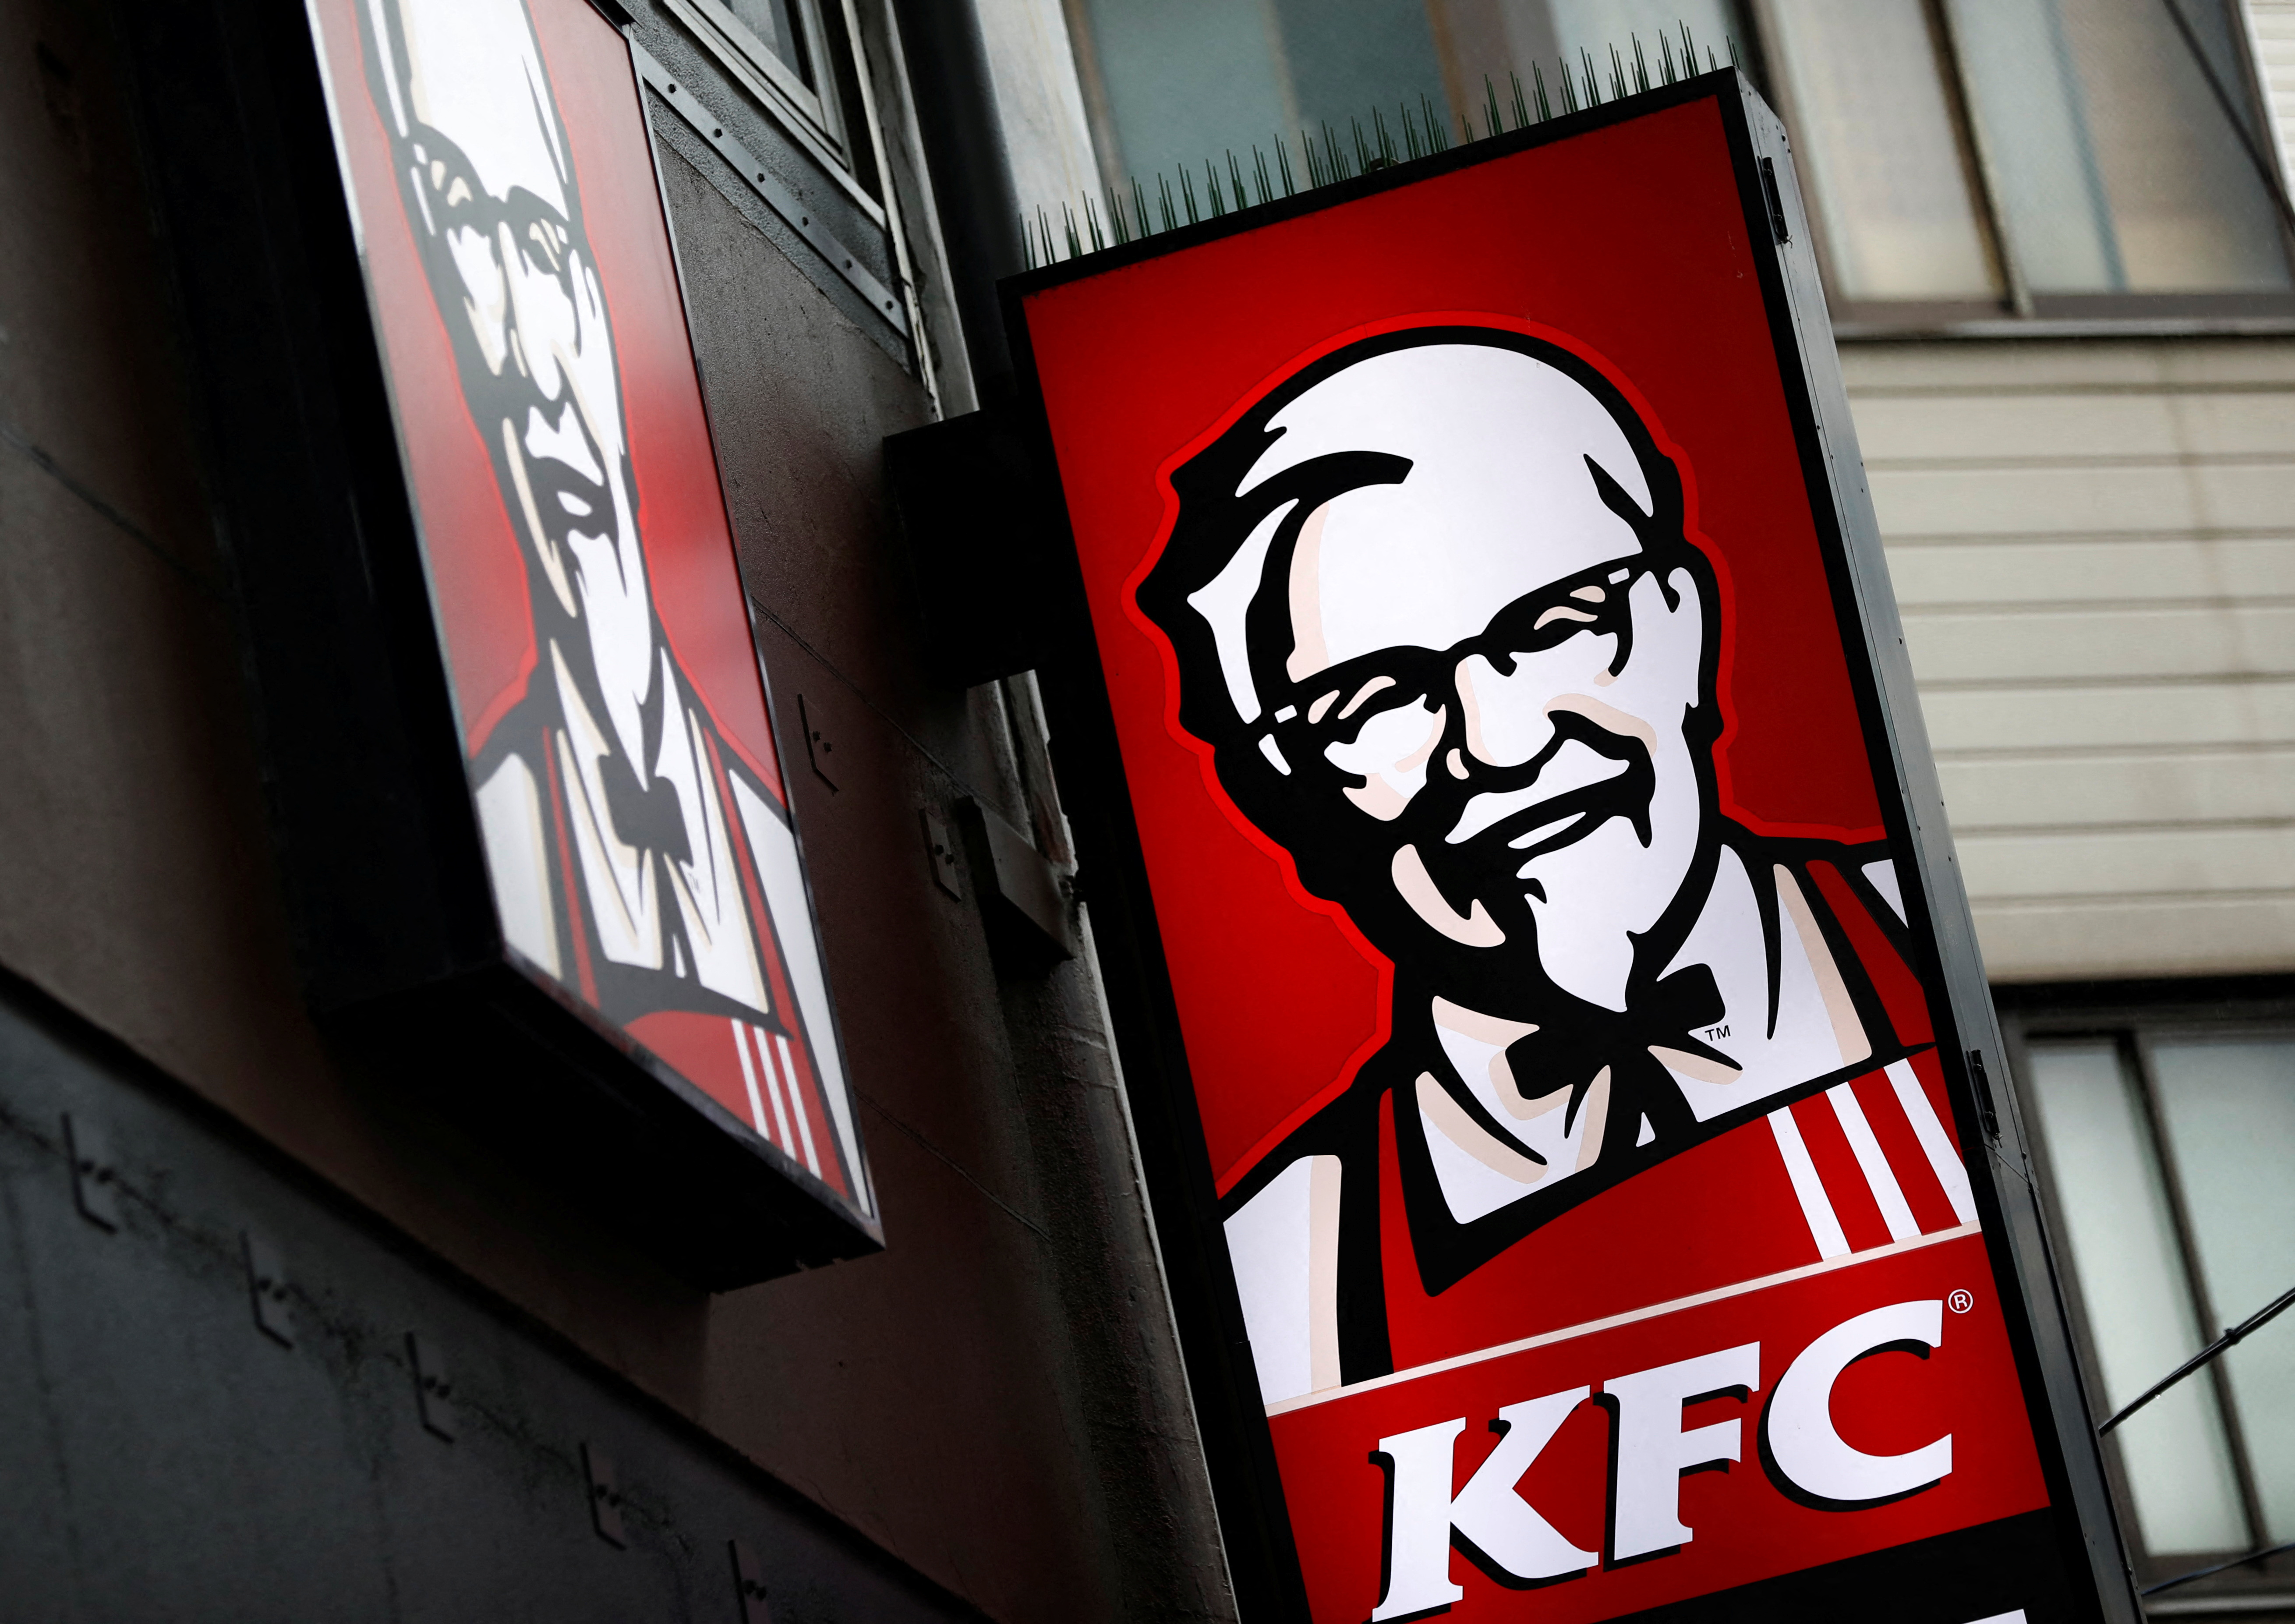 A Kentucky Fried Chicken (KFC) restaurant is pictured in Tokyo